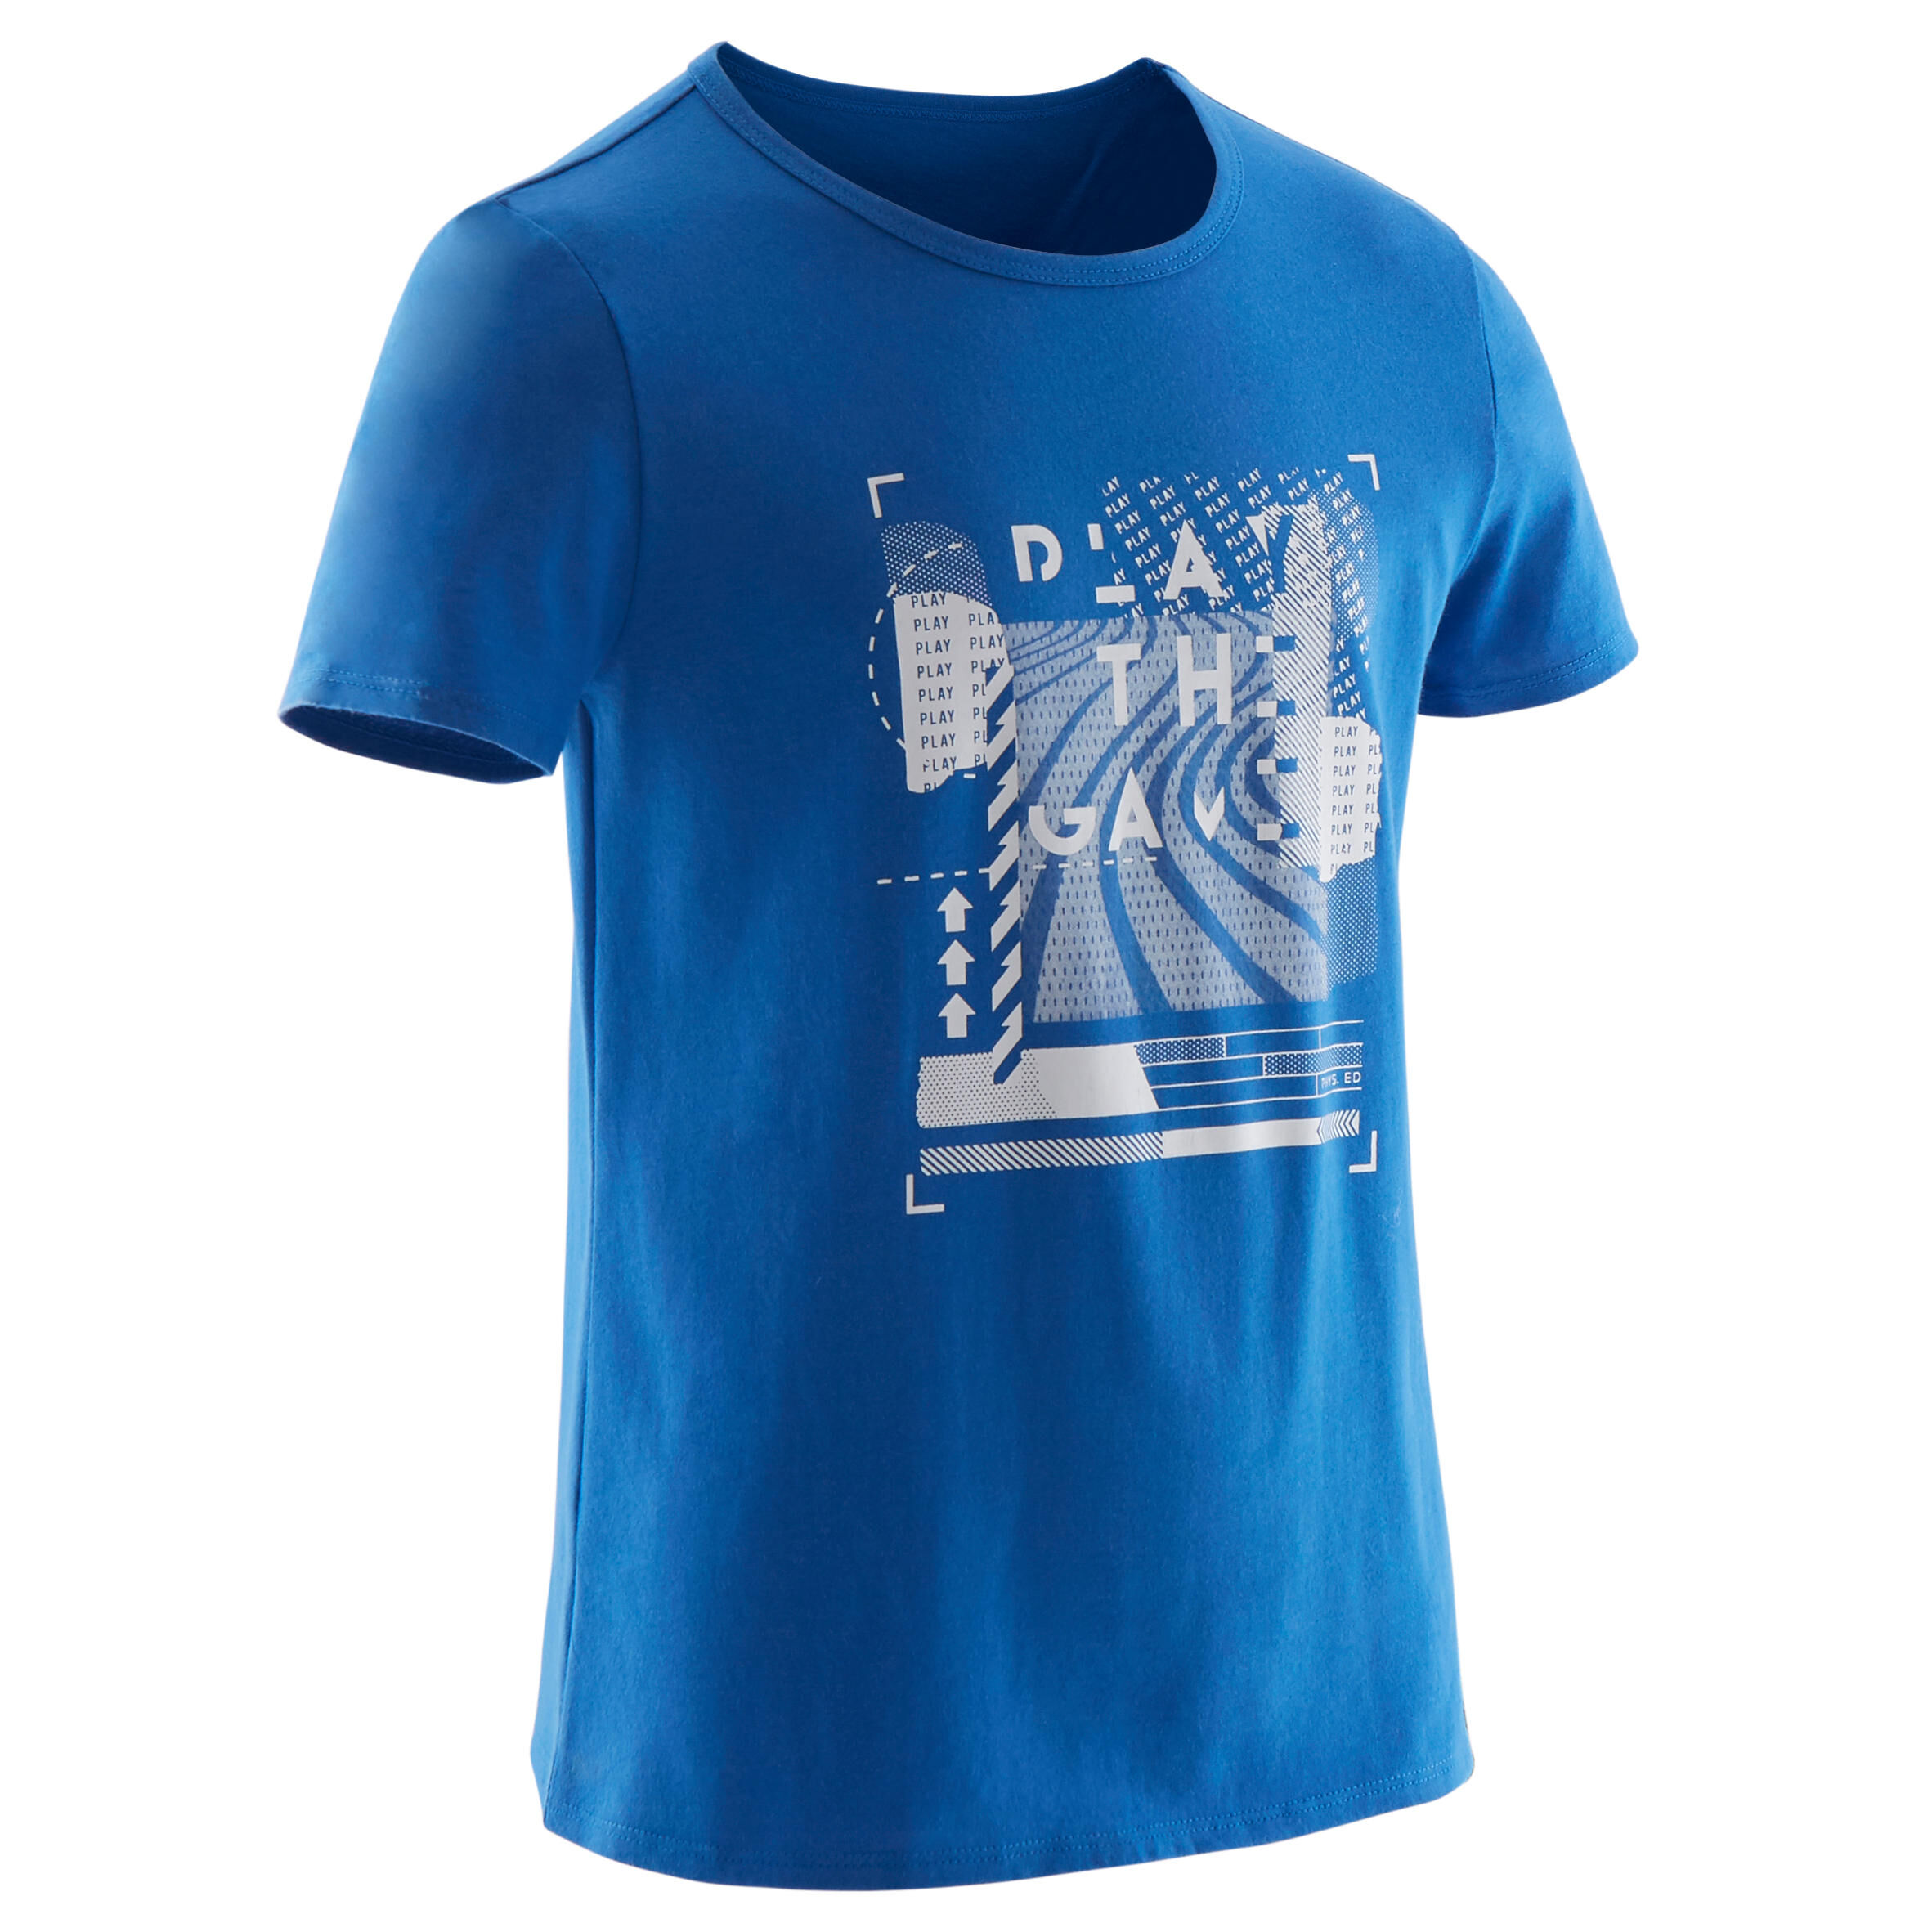 DOMYOS 100 Boys' Short-Sleeved Gym T-Shirt - Blue/White Print